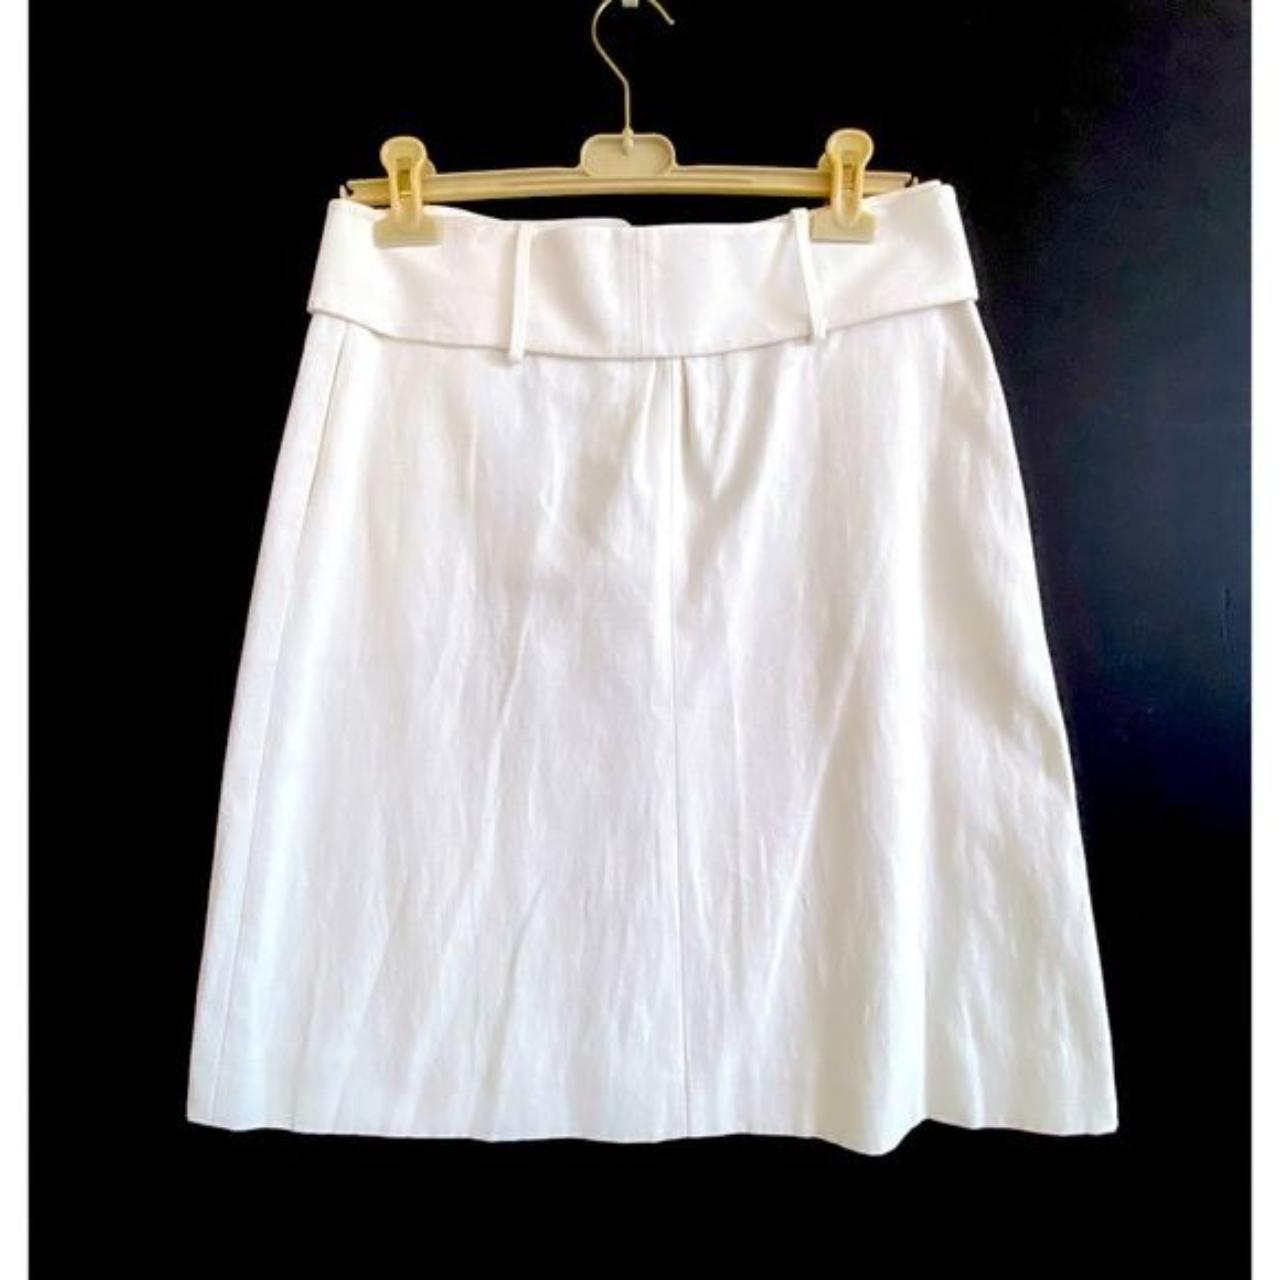 Chloé Women's White and Cream Skirt (2)